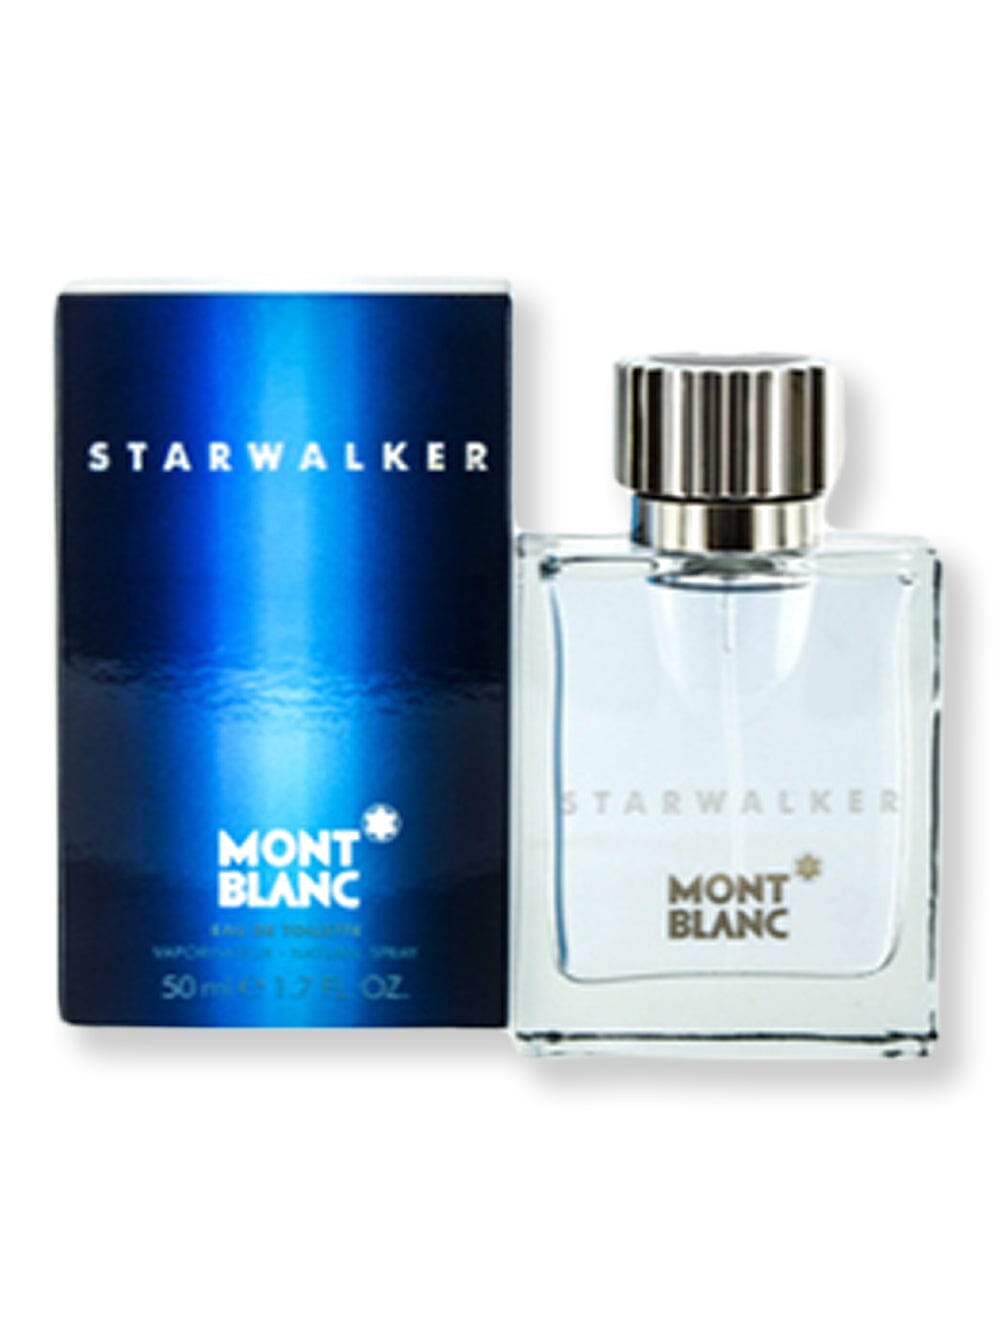 Montblanc Montblanc Starwalker EDT Spray 1.7 oz Perfume 